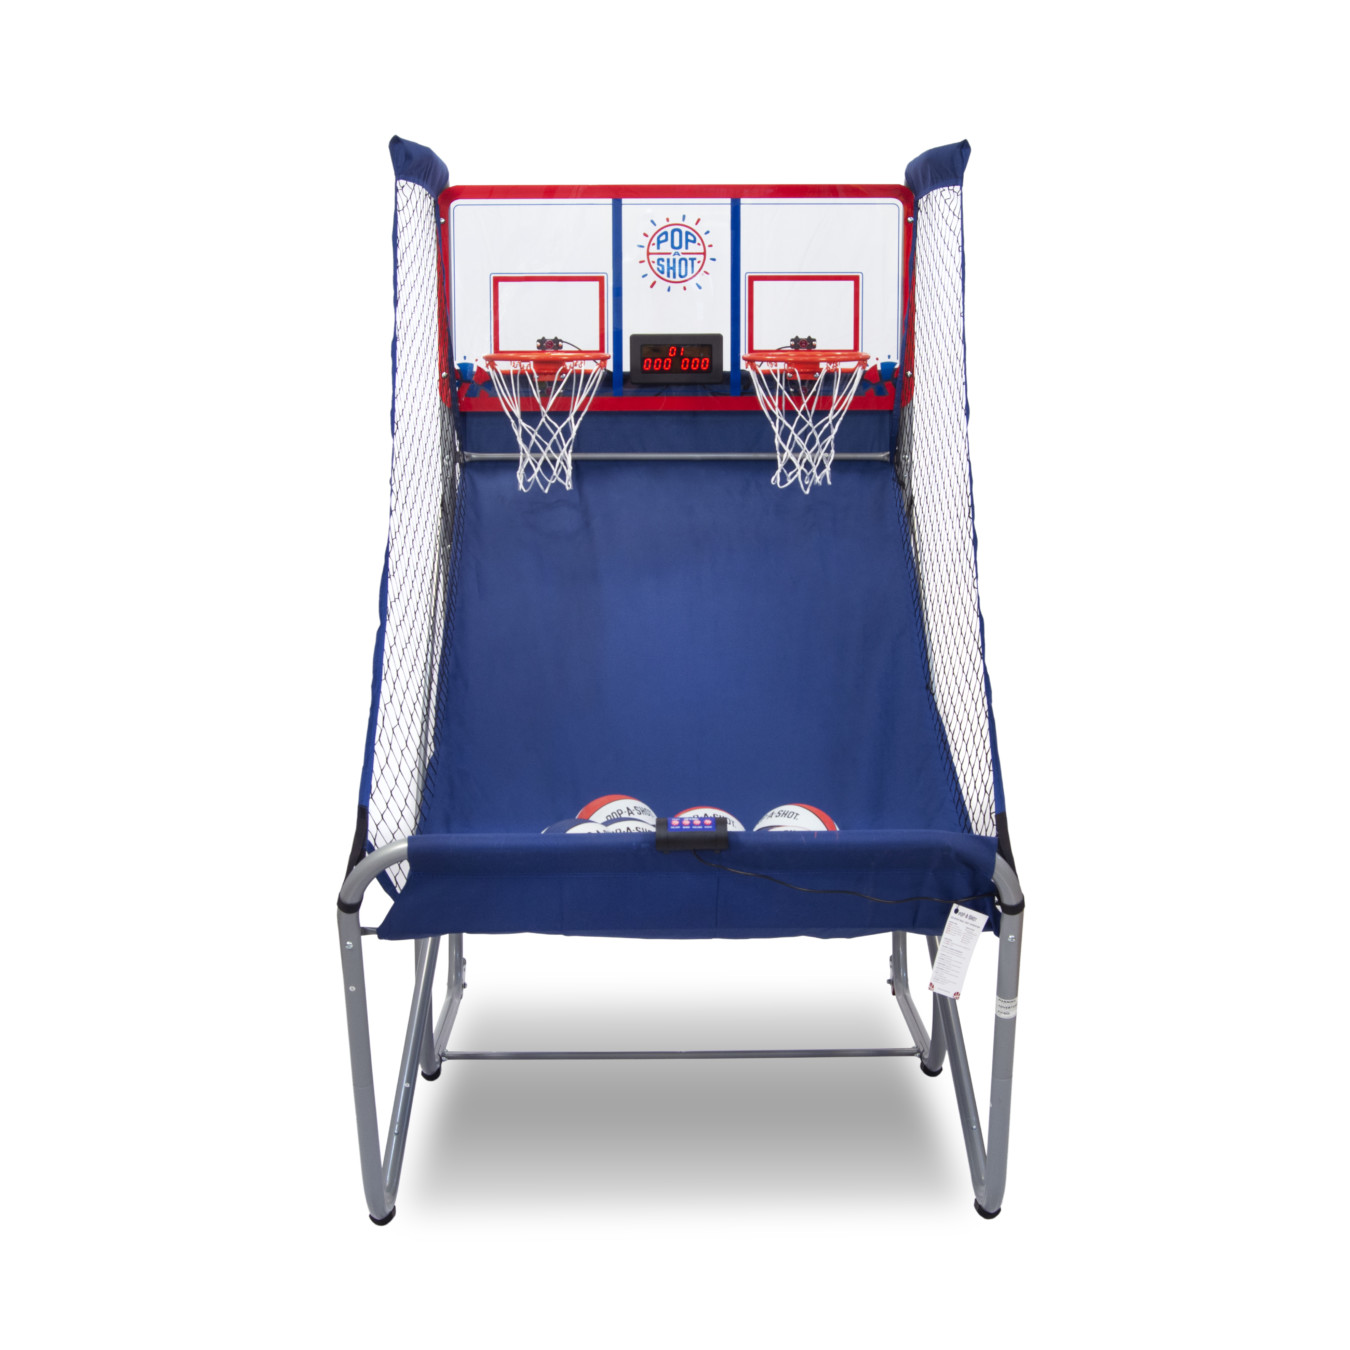 POP-A-SHOT® Home Series Indoor/Outdoor Dual Shot Basketball Arcade Game